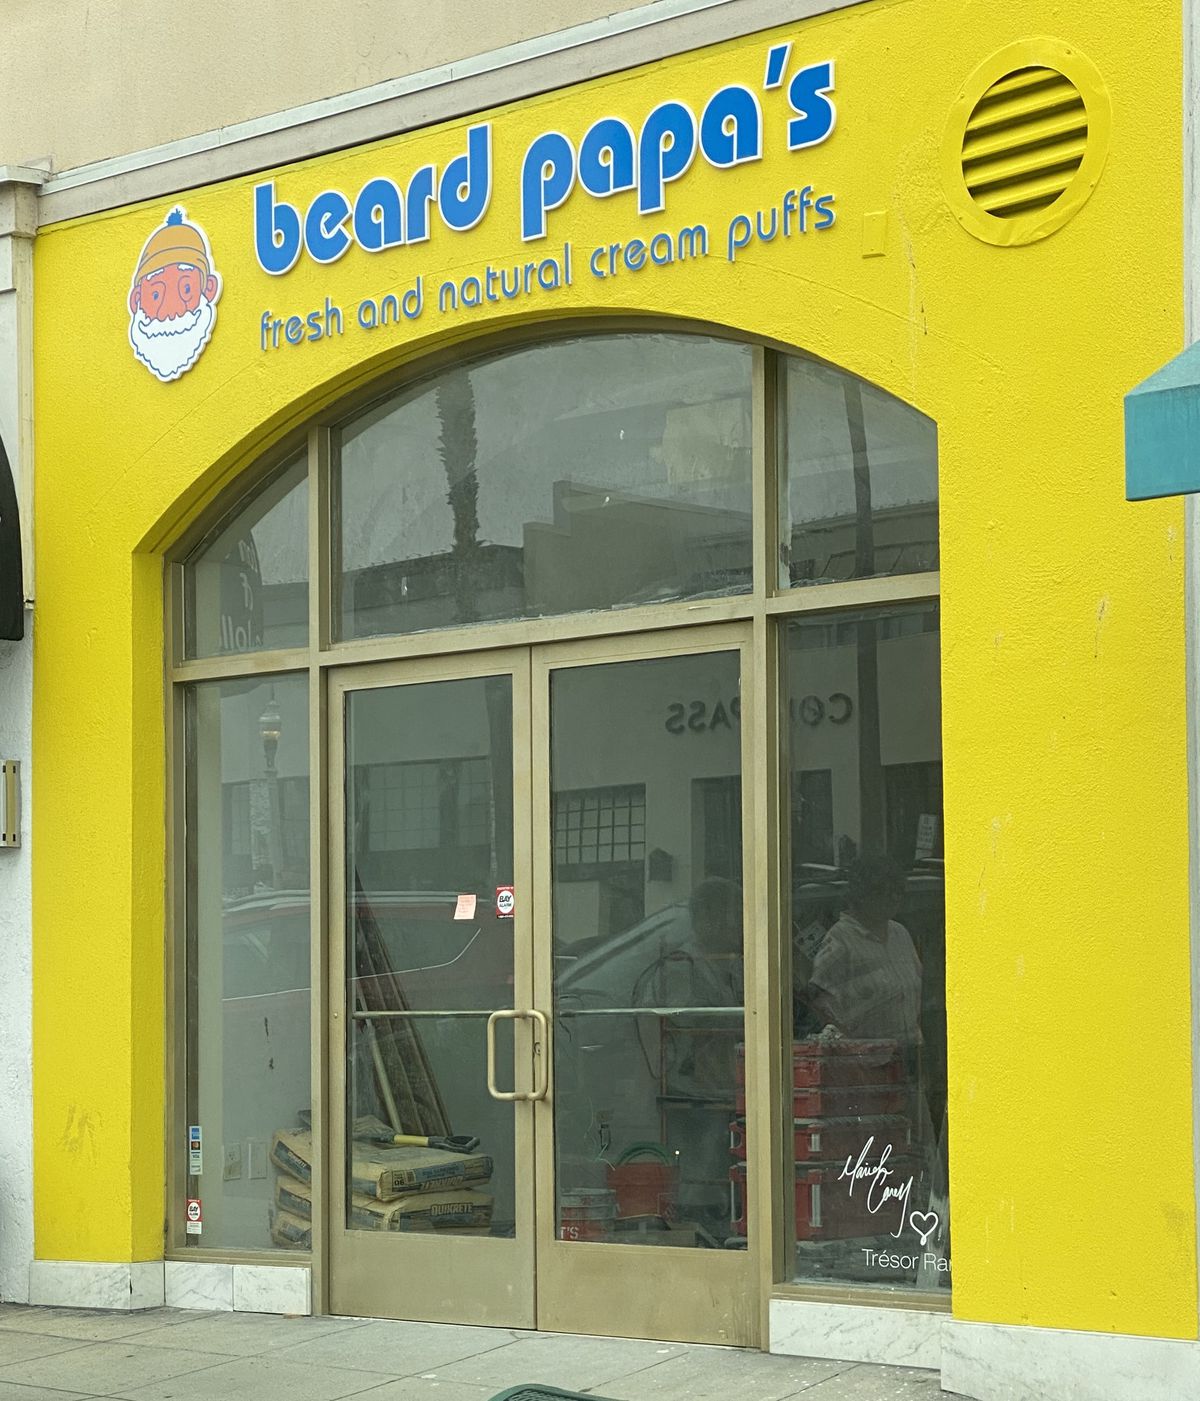 The Girard Avenue Beard Papa storefront